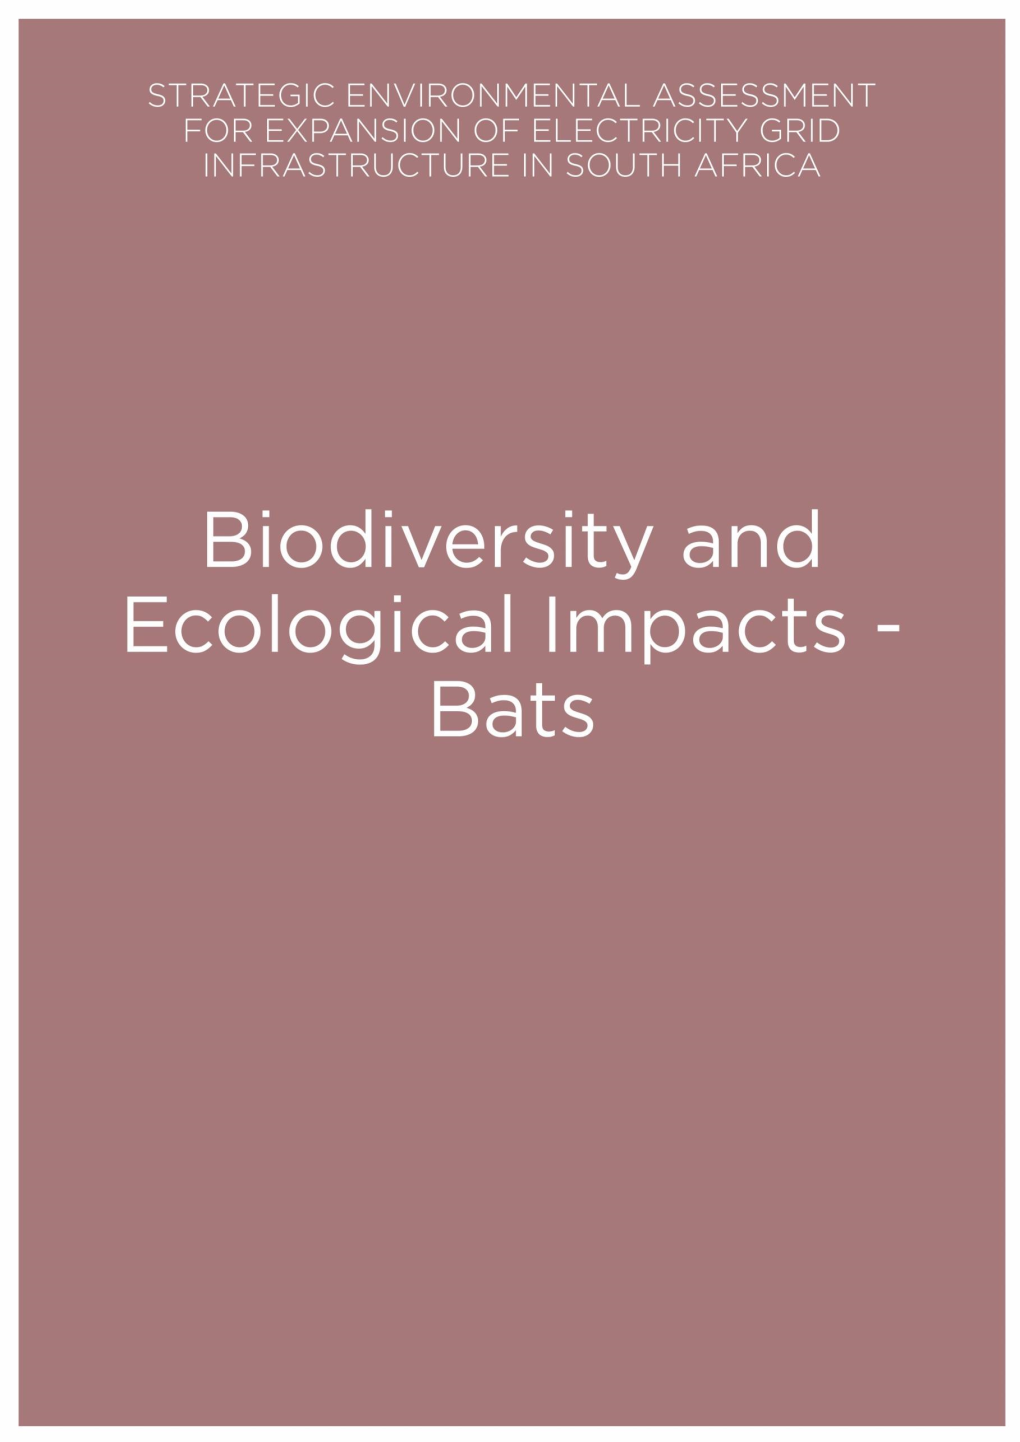 BATS 7 Contributing Authors Kate Macewan1,2 8 9 1 Inkululeko Wildlife Services (Pty) Ltd